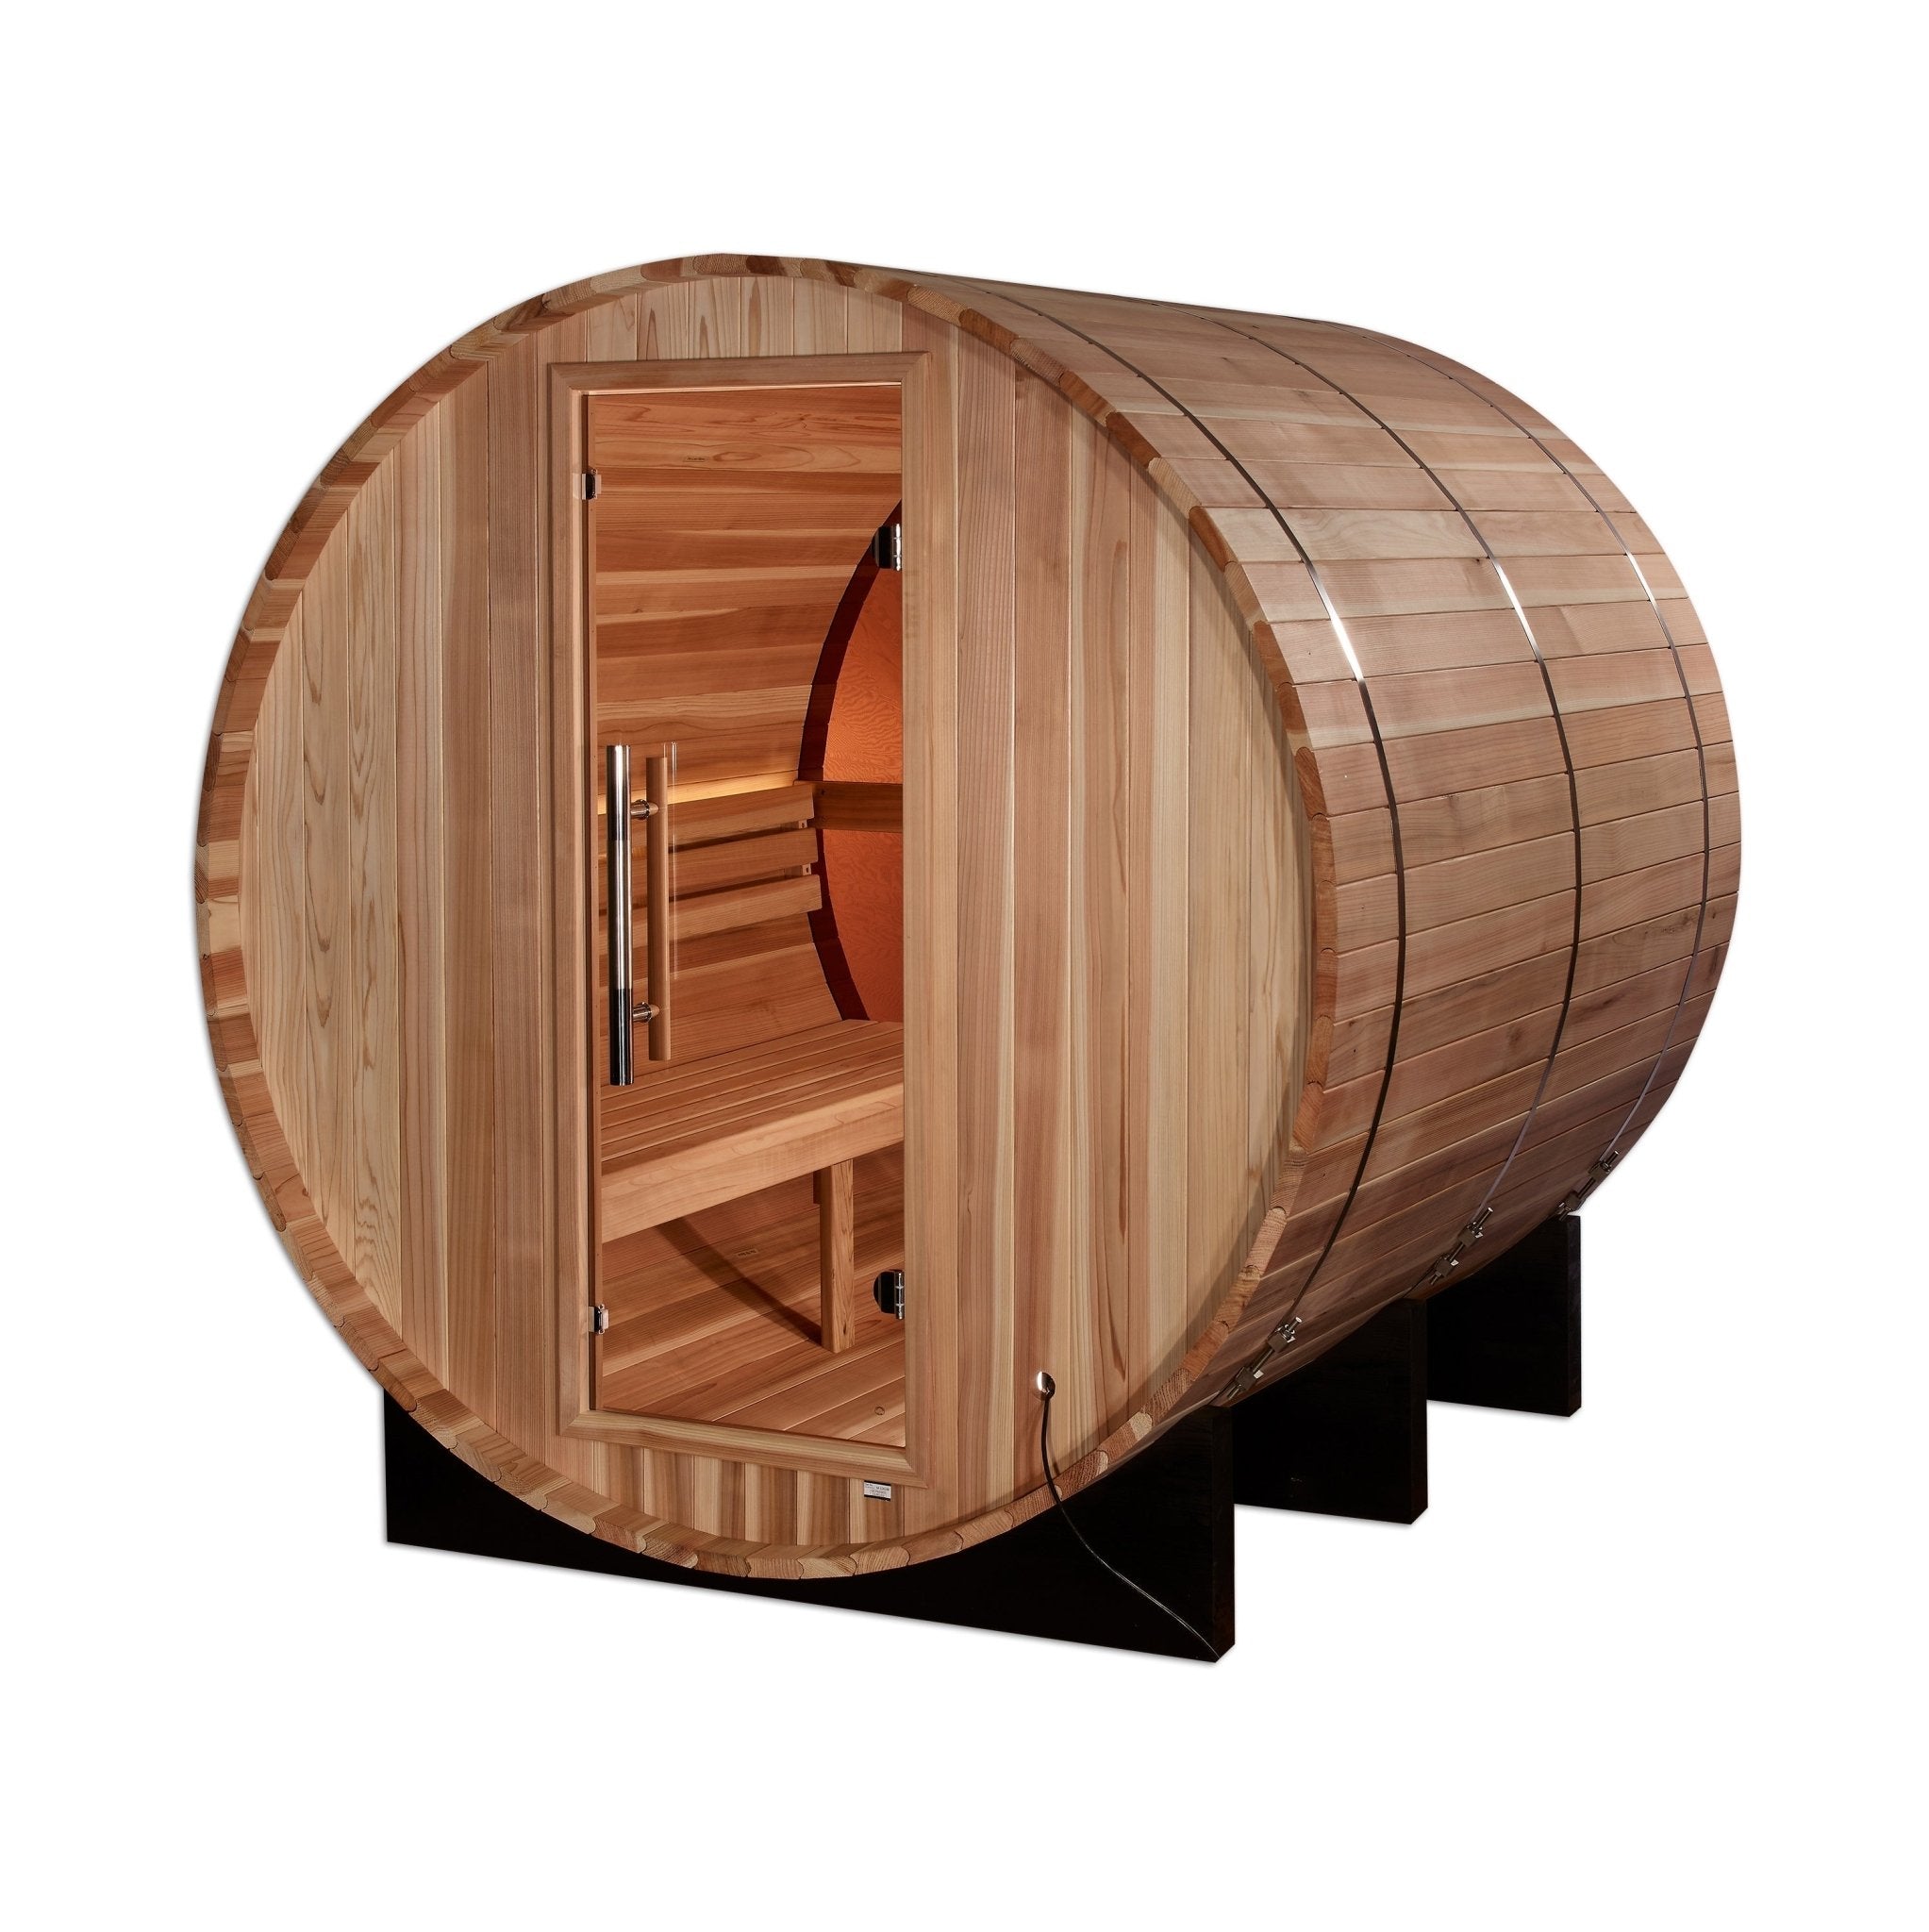 Golden Designs "Zurich" 4 Person Barrel with Bronze Privacy View - Traditional Sauna - Pacific Cedar - The Sauna World